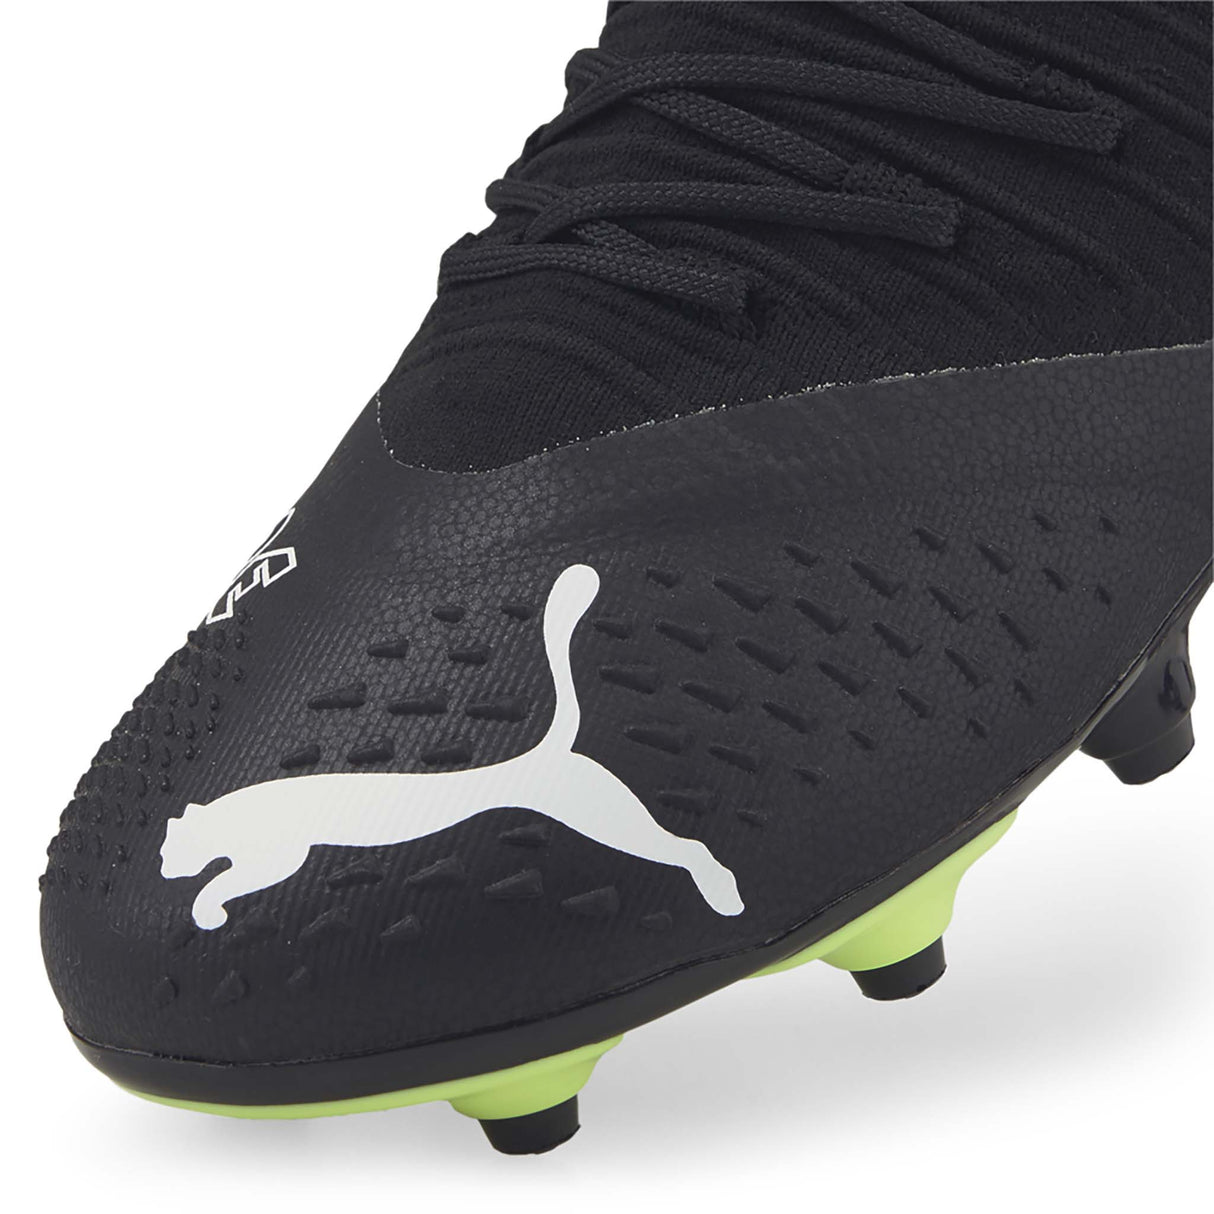 Puma Future Z 3.3 FG/AG souliers de soccer junior black white pointe